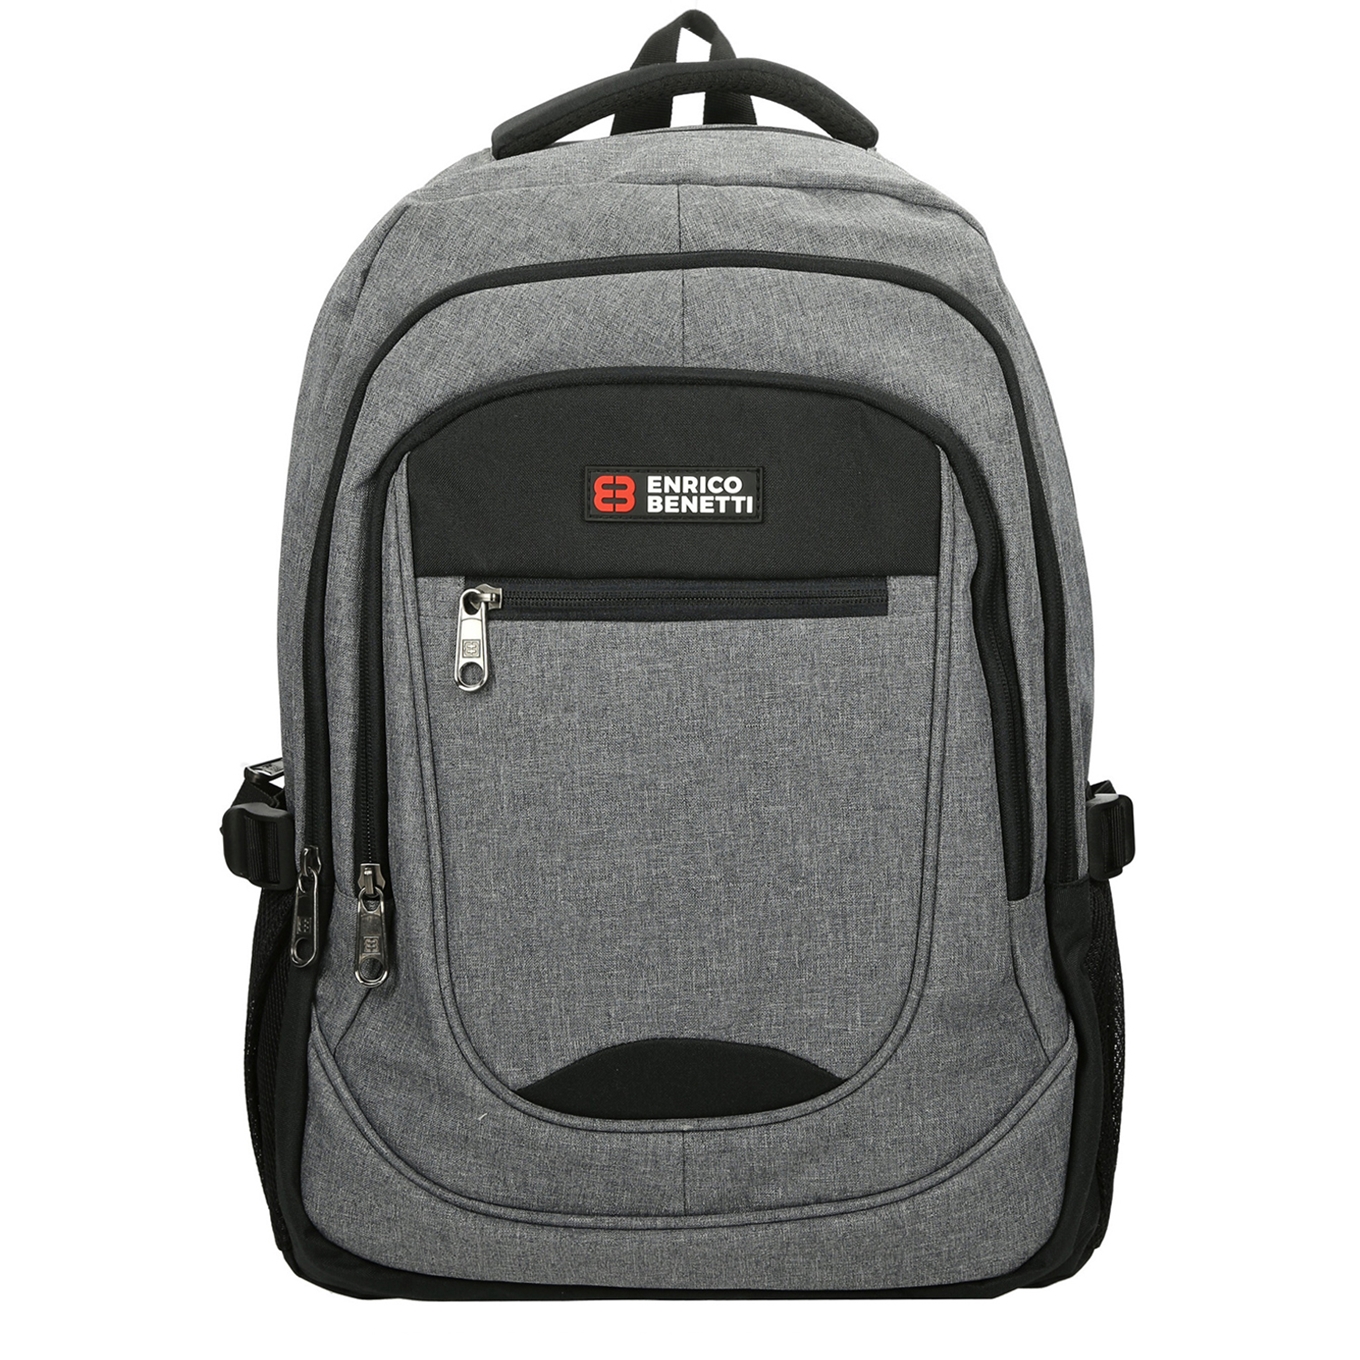 Enrico Benetti Hamburg 17&apos;&apos; Laptop Backpack light grey backpack